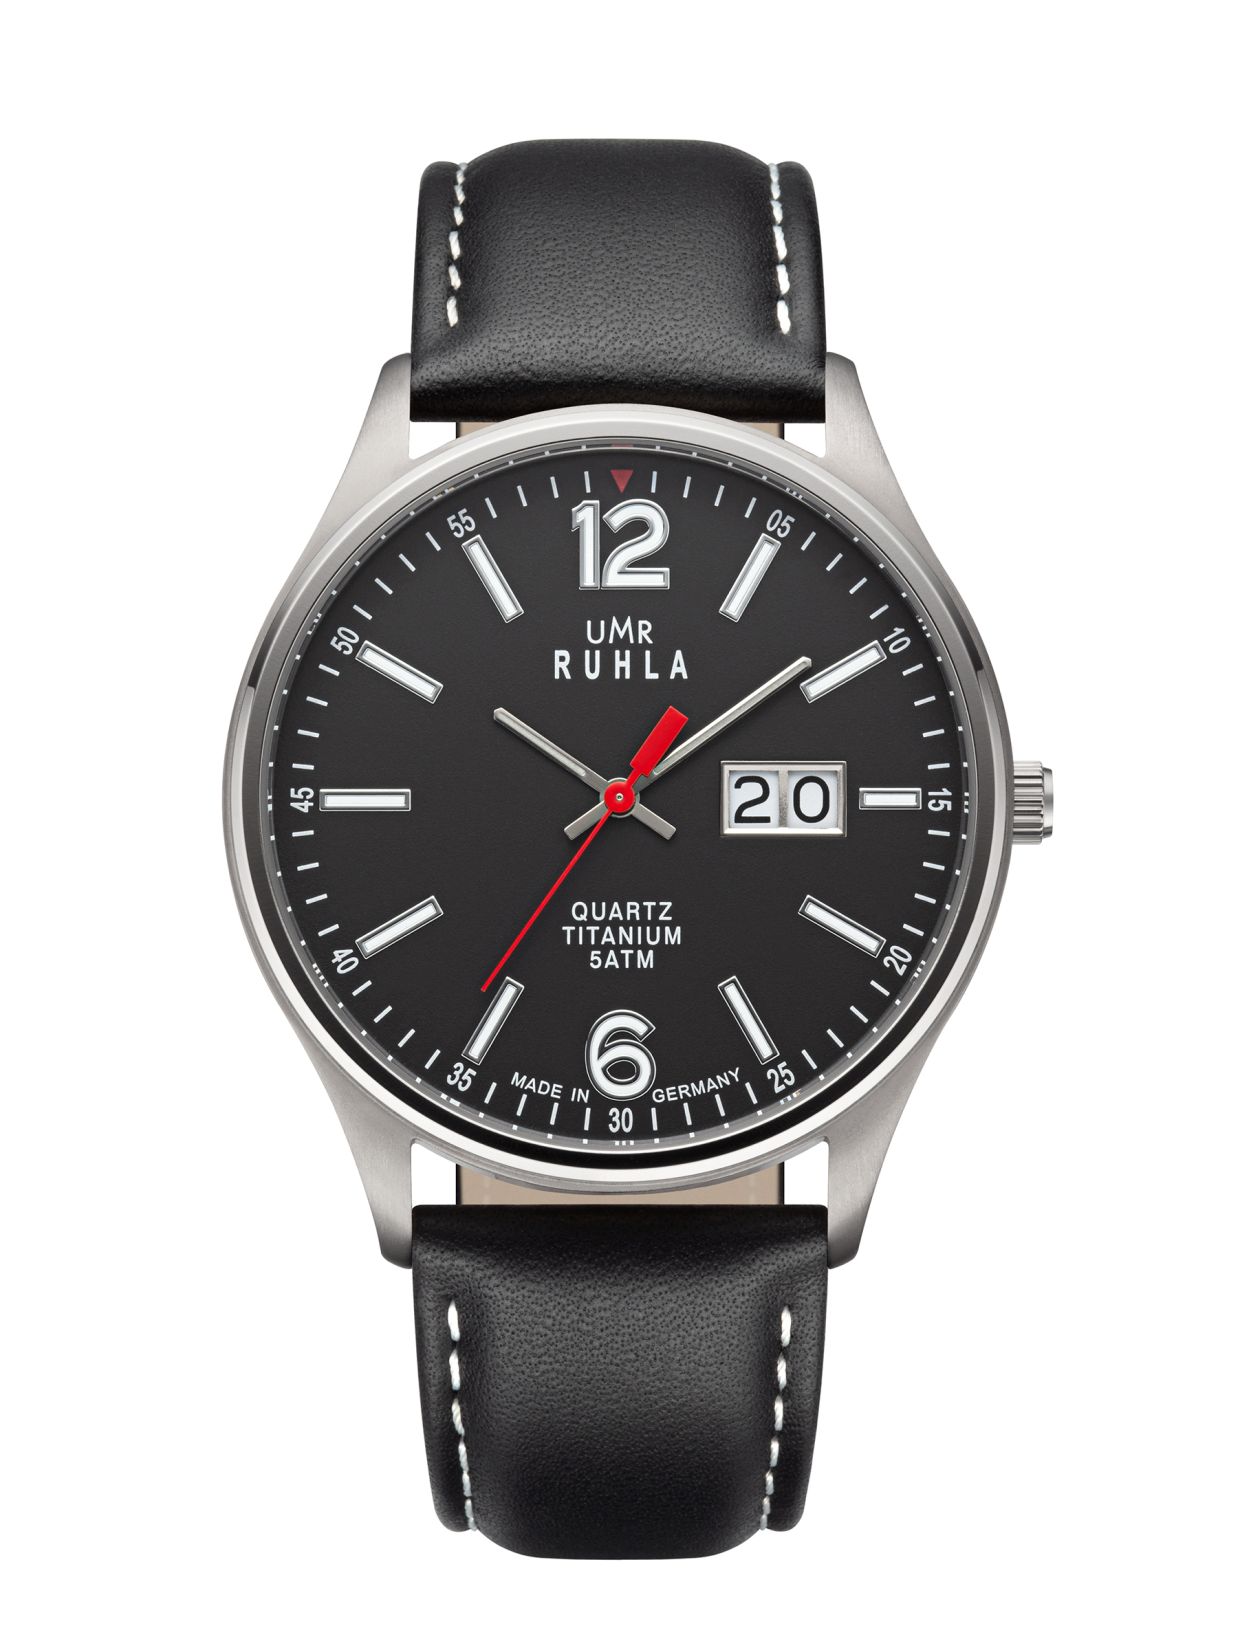 Uhren Manufaktur Ruhla - Armbanduhr Big Date schwarz - made in Germany